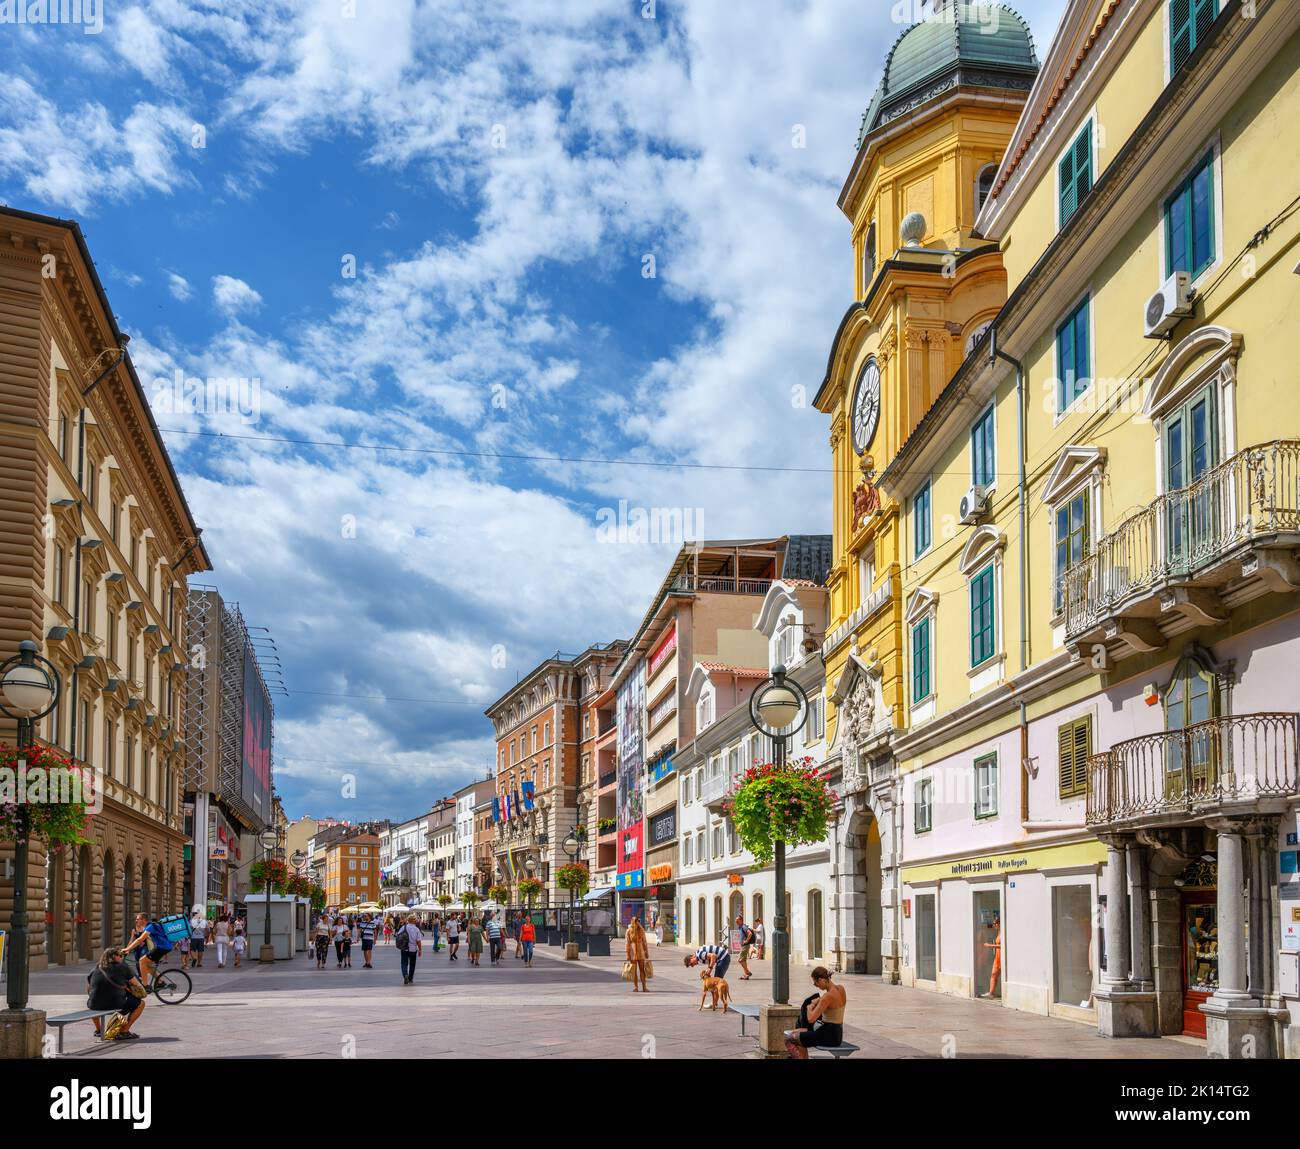 View down the main street, Korzo, Rijeka, Croatia Stock Photo